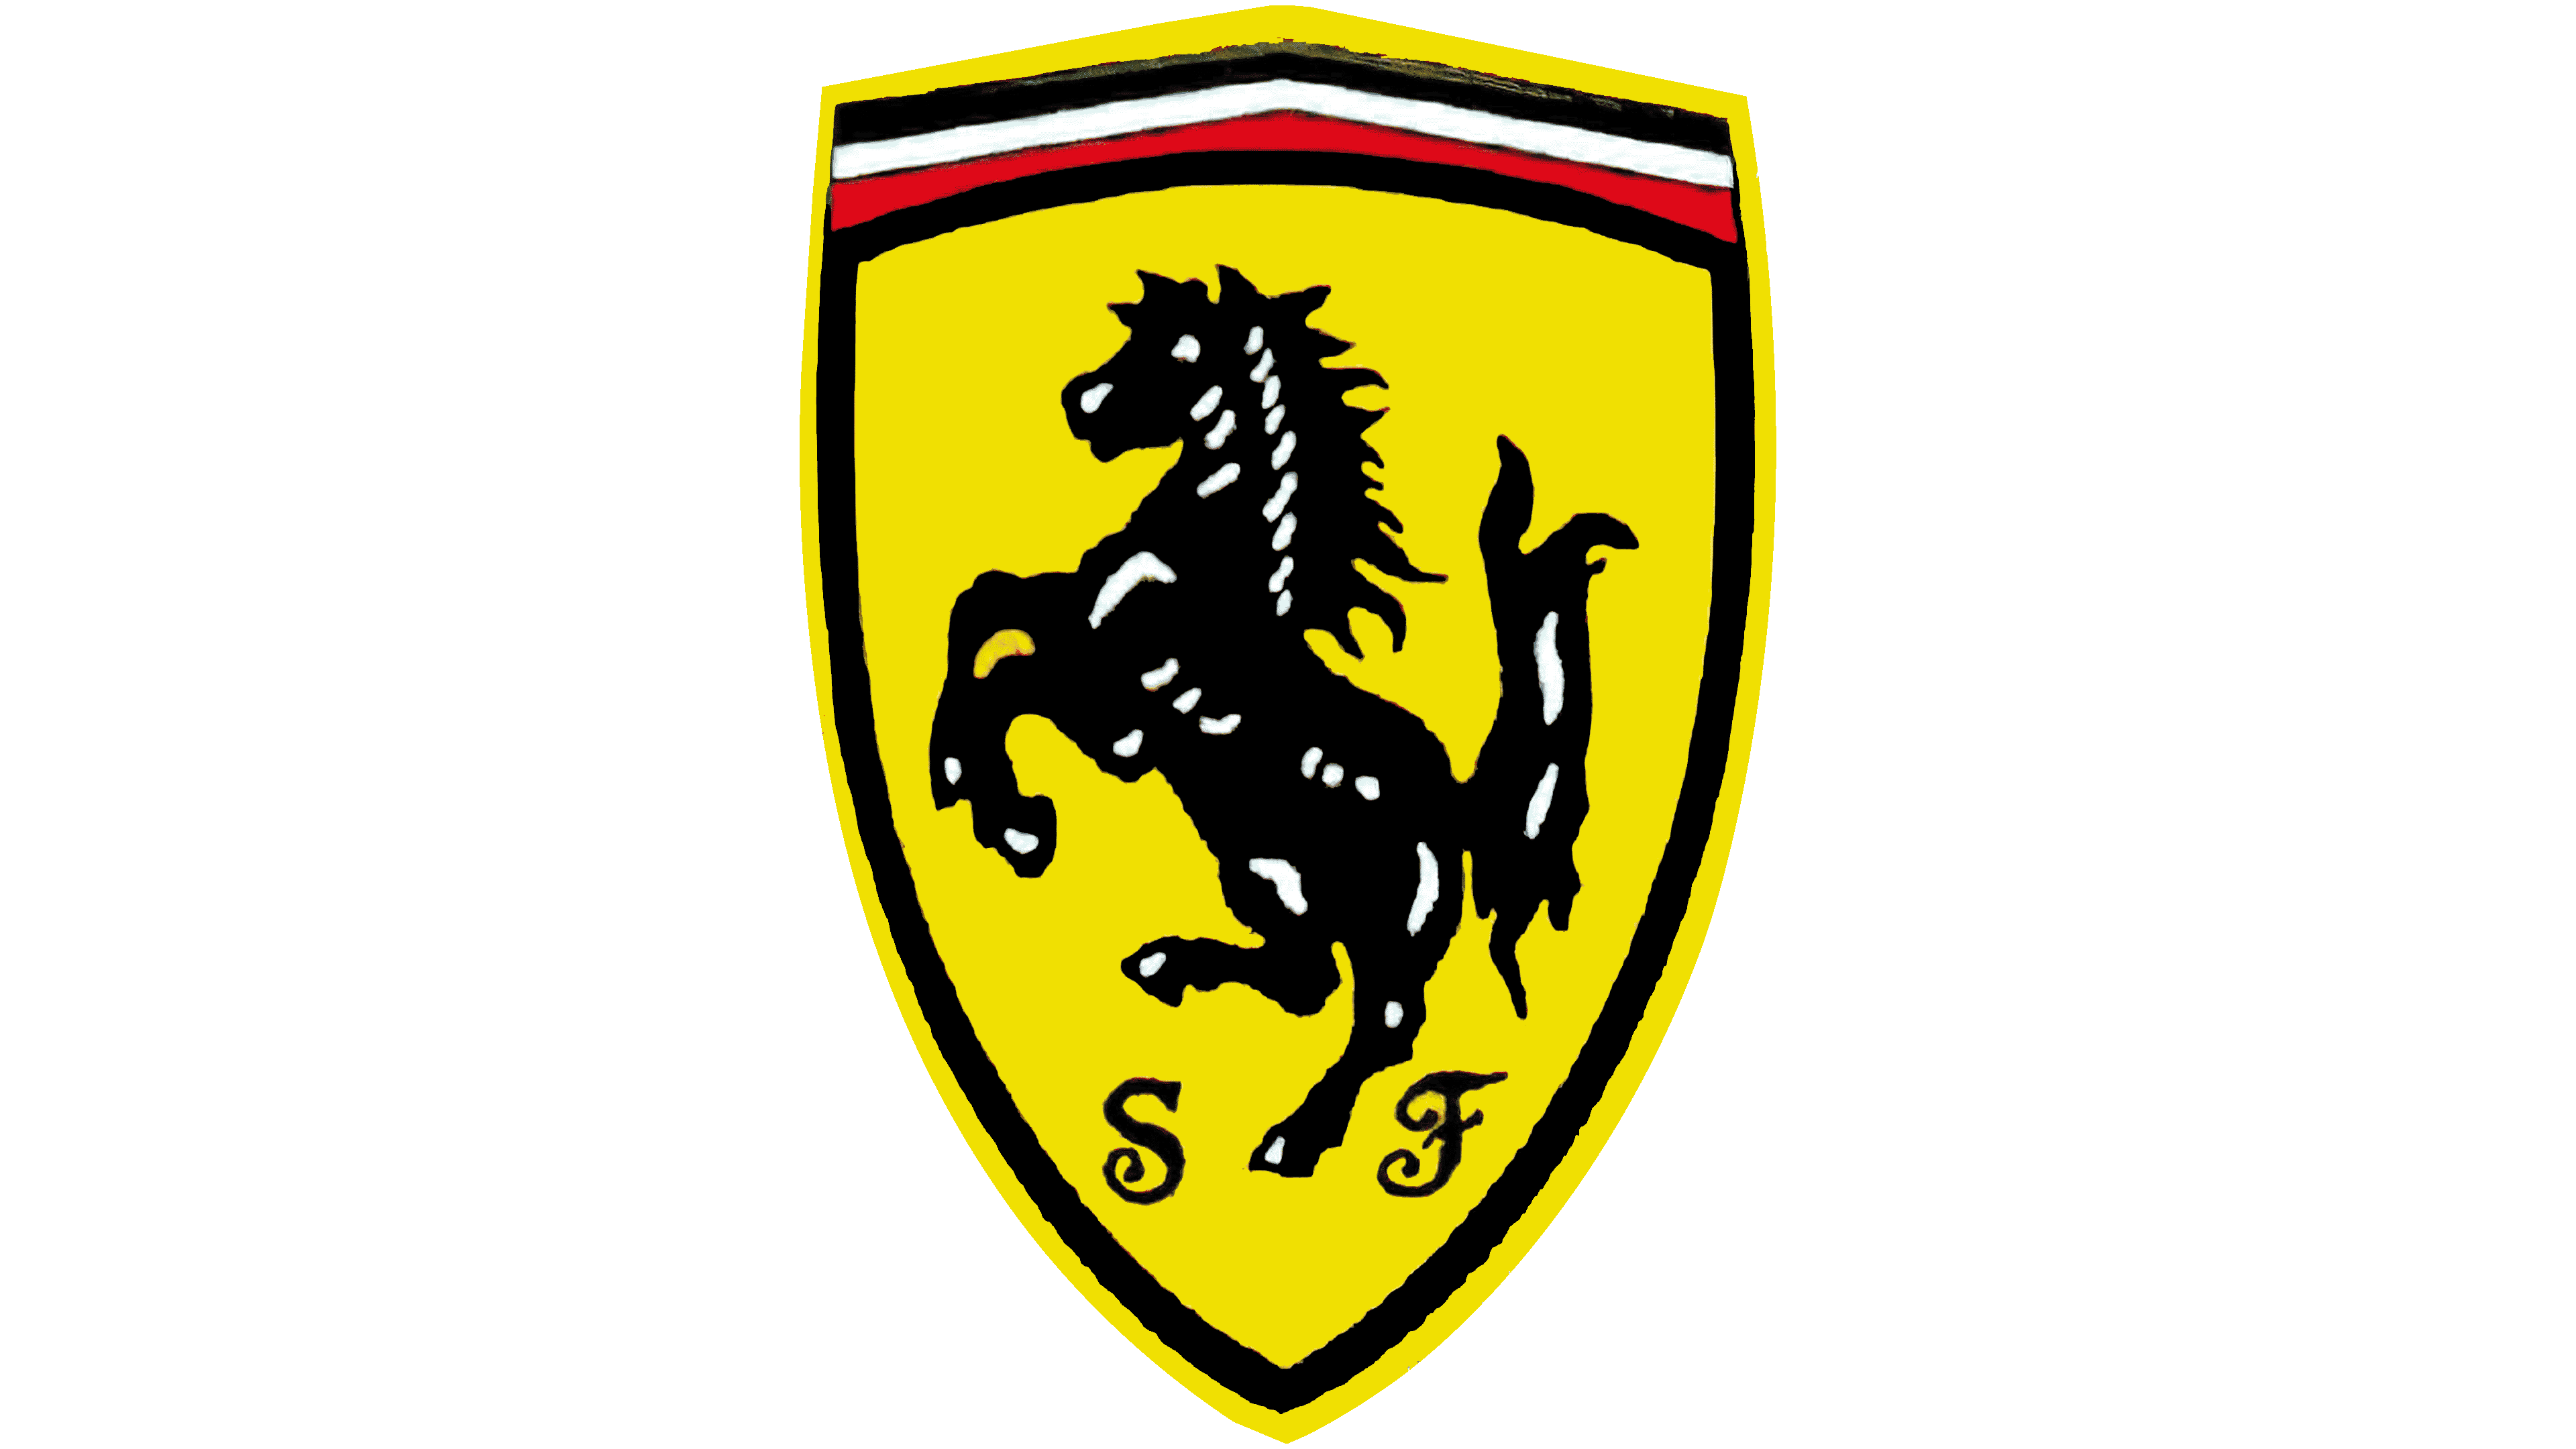 How to Draw the Ferrari Logo symbol emblem